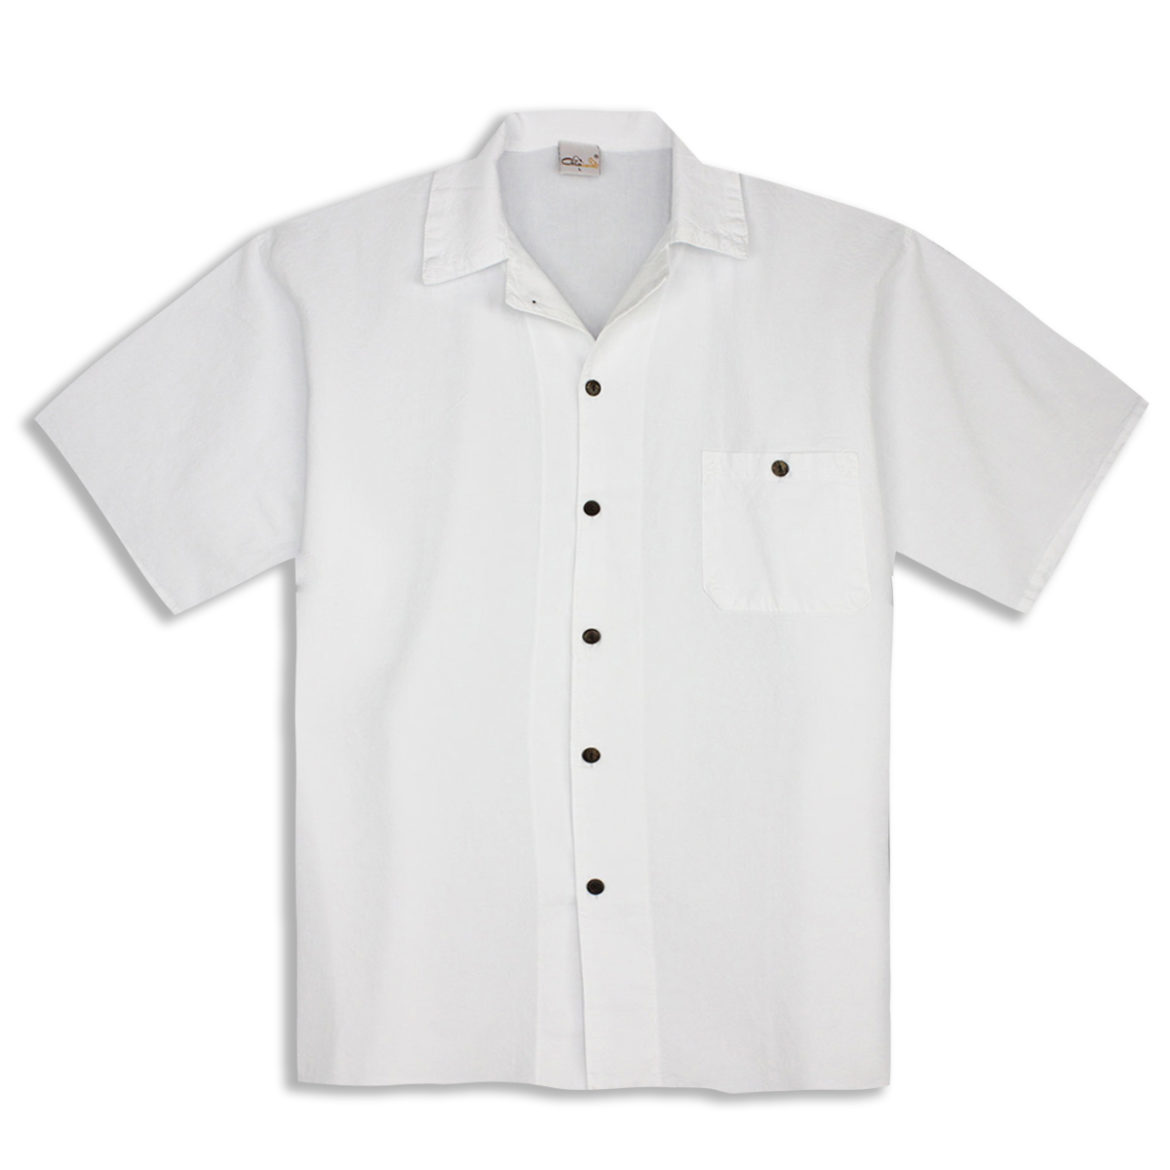 Men's Hawaiian Shirt - Oasis - White